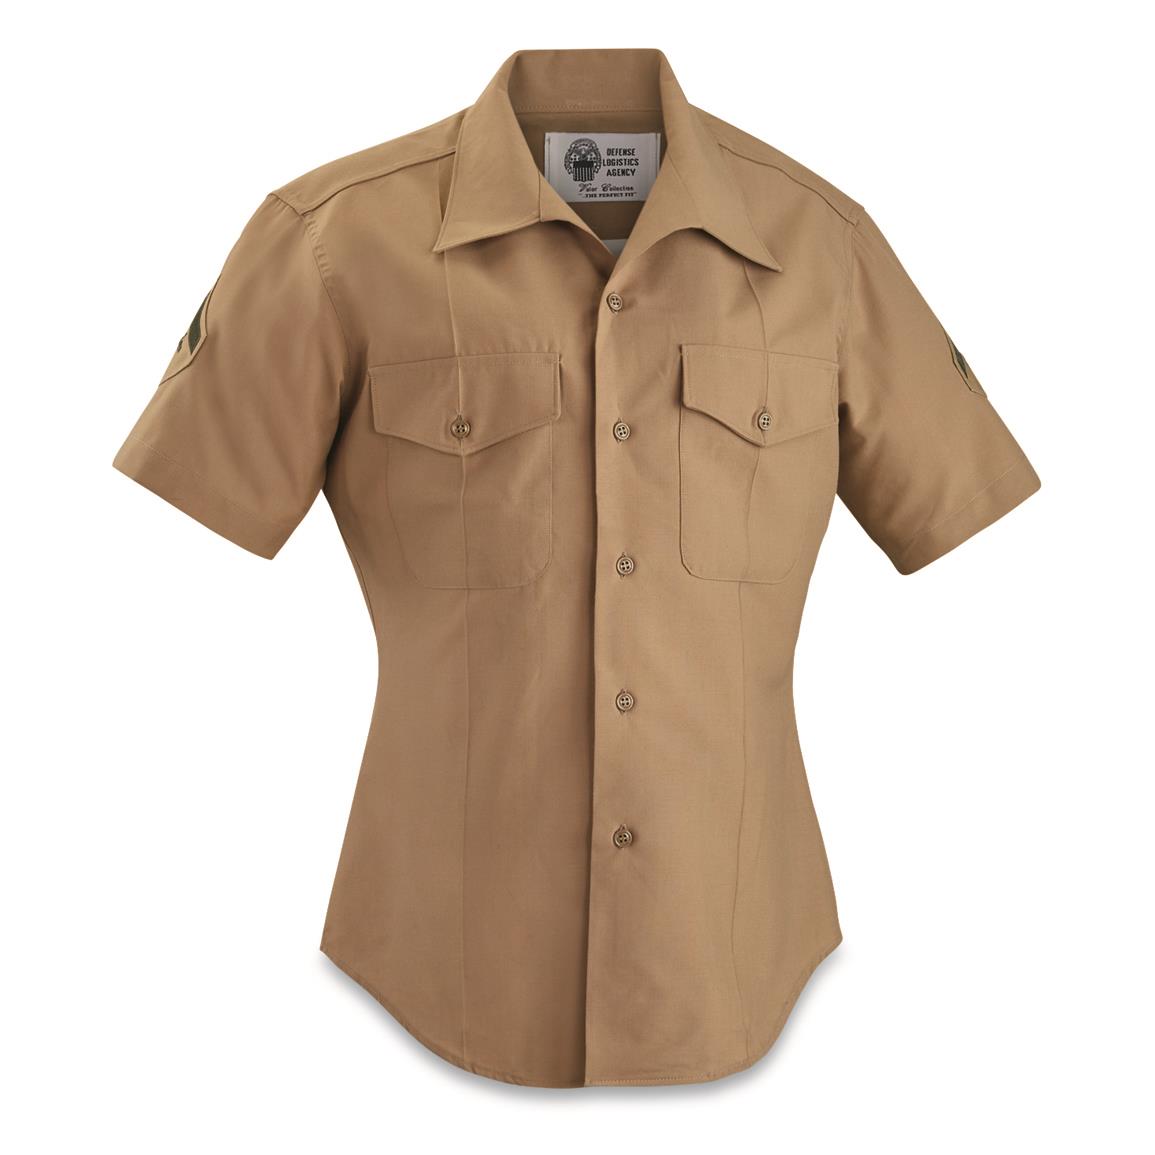 USMC Surplus Short-sleeve Service Shirt, Used, Tan